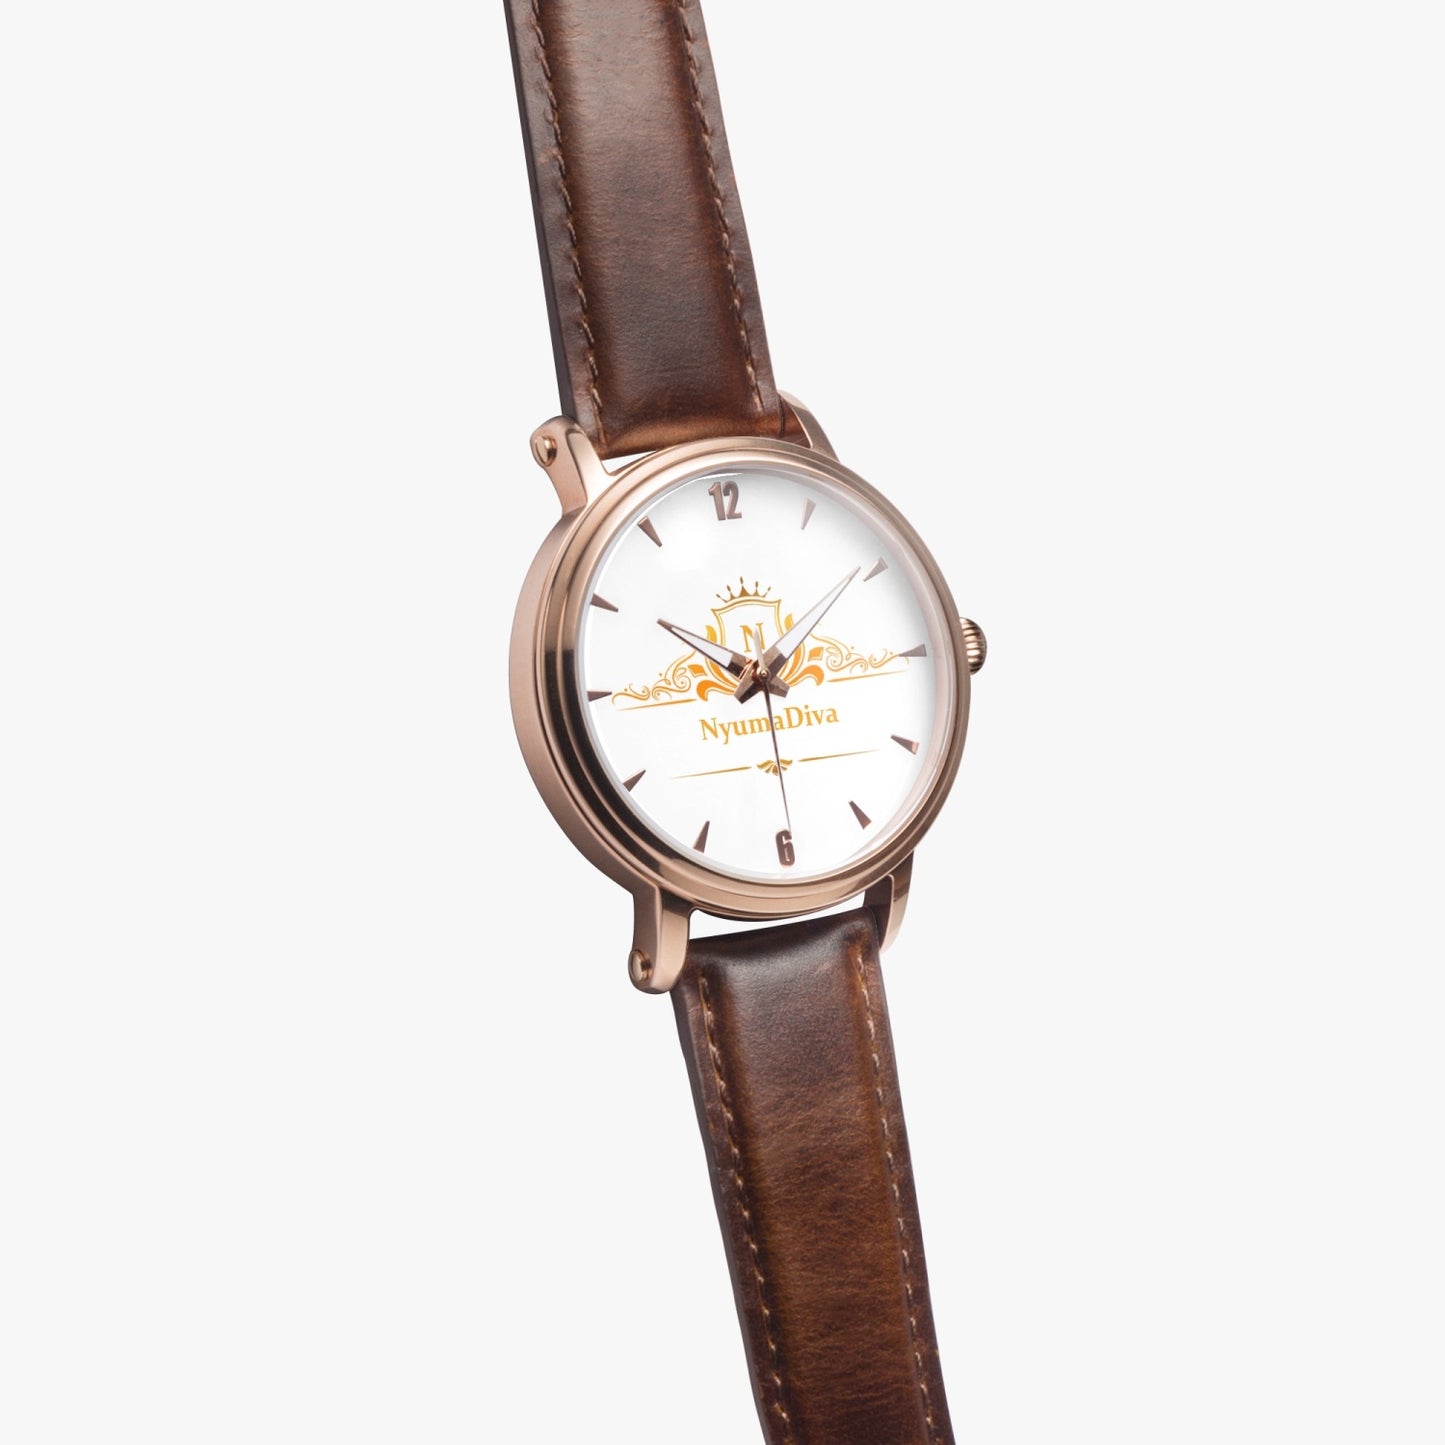 Royal Nyumadiva 46mm Unisex Automatic Watch (Rose Gold)